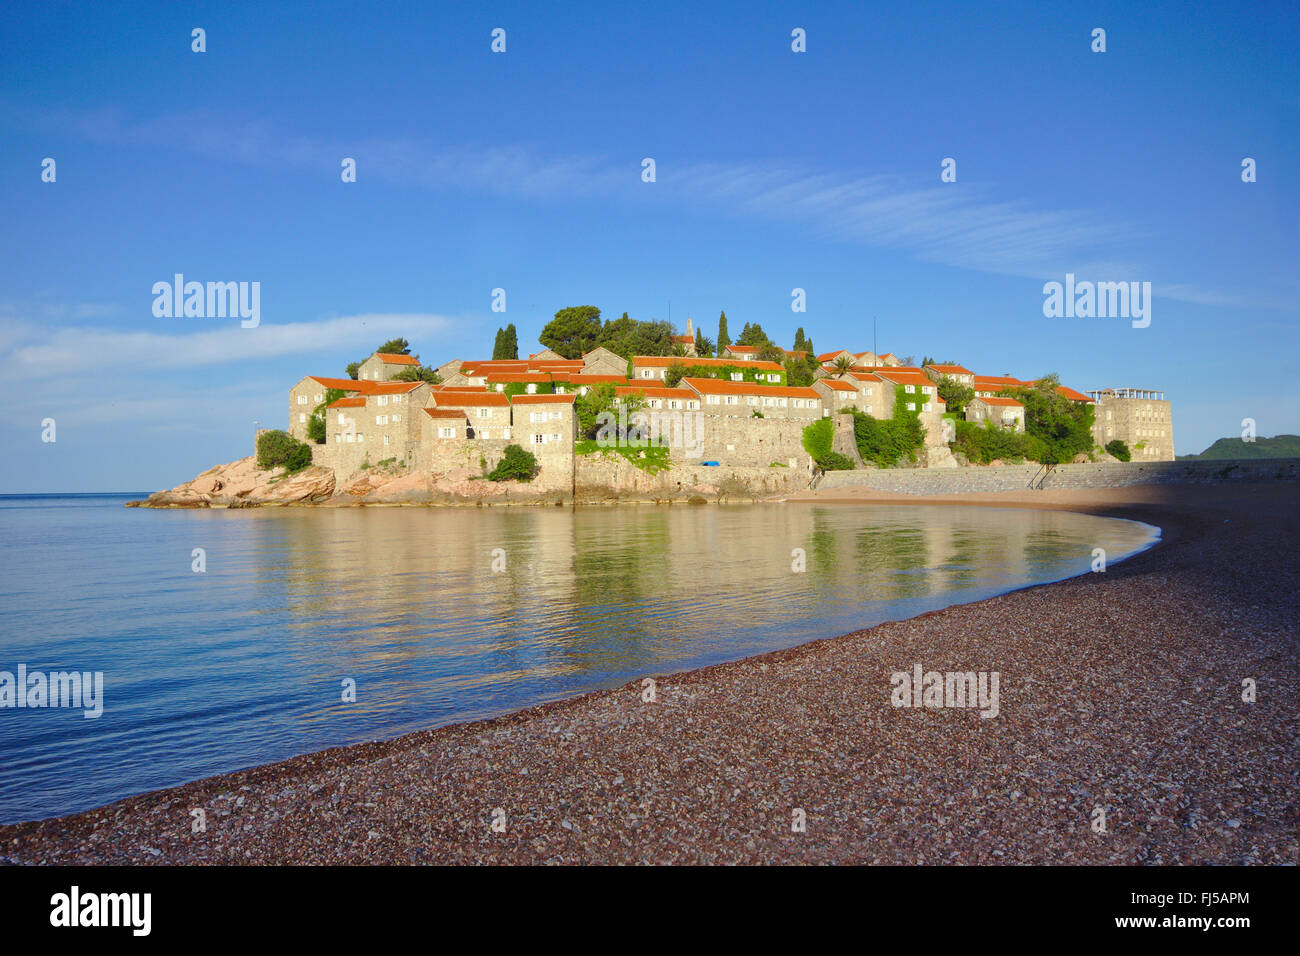 ilet and hotel resort Sveti Stefan, Montenegro Stock Photo